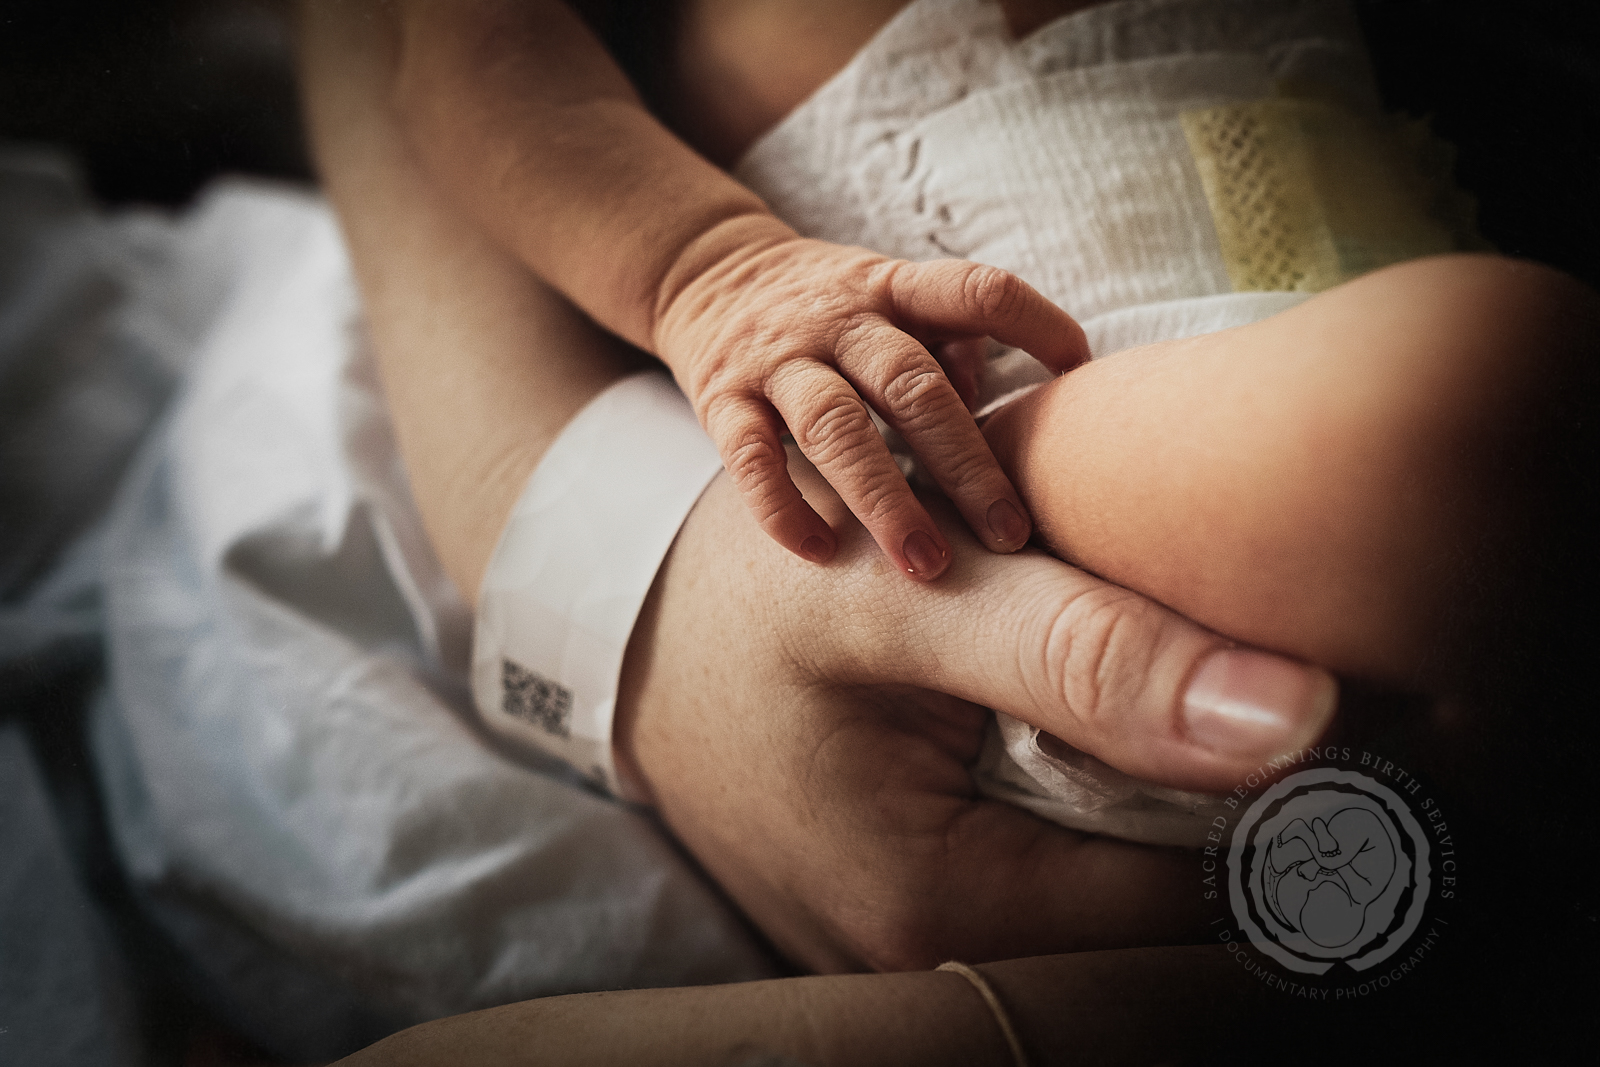 Mum and newborn baby hands together after their hospital birth near Derby, Derbyshire, UK.